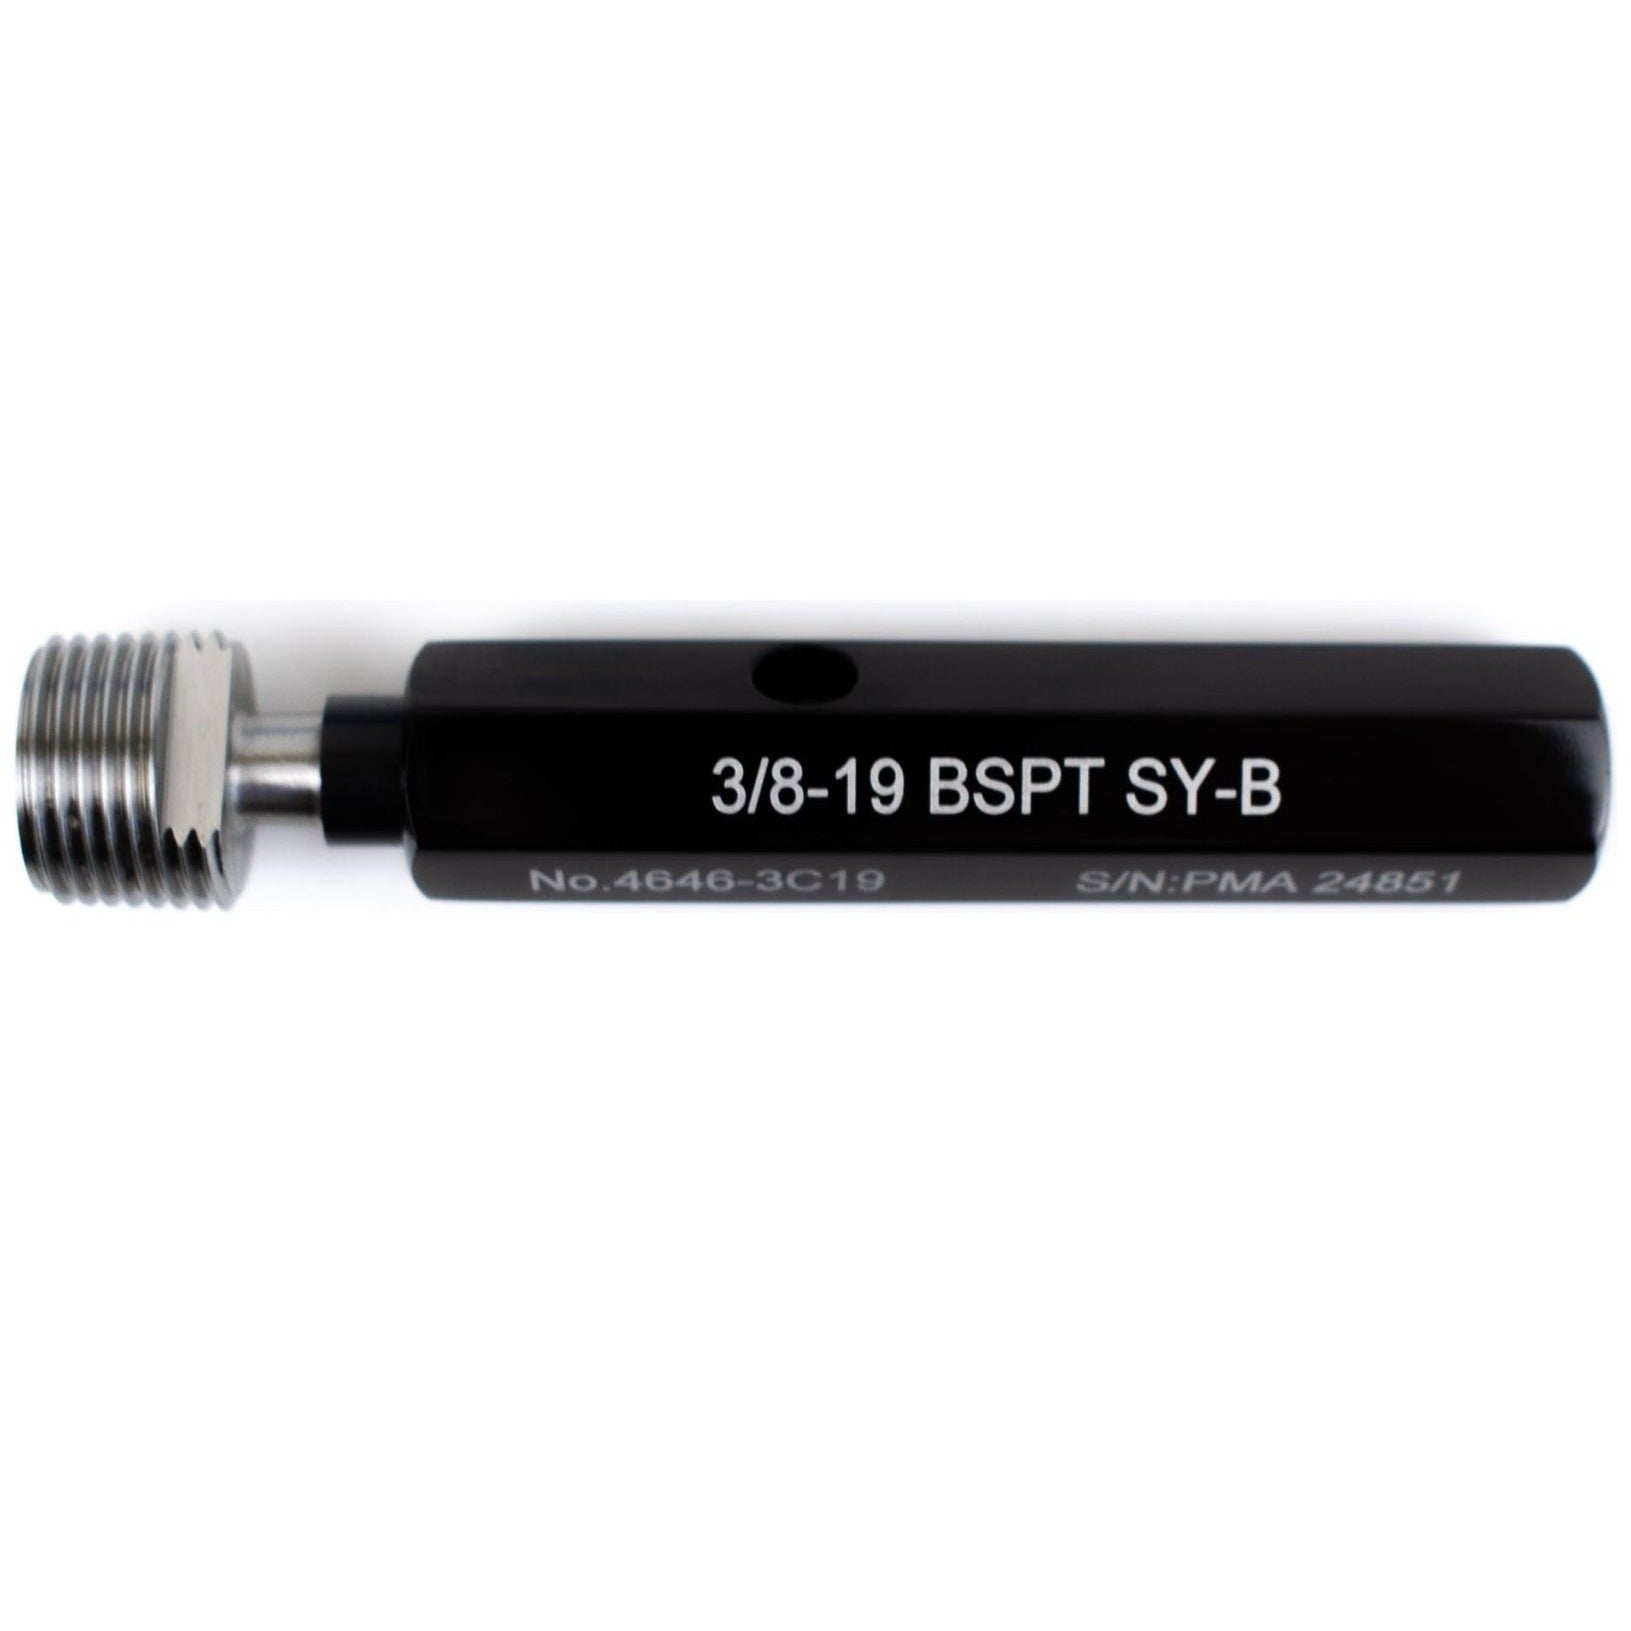 Insize Thread Plug Gauge 3/8"-19 (BS21-1985) BPST Series - 4646-3C19